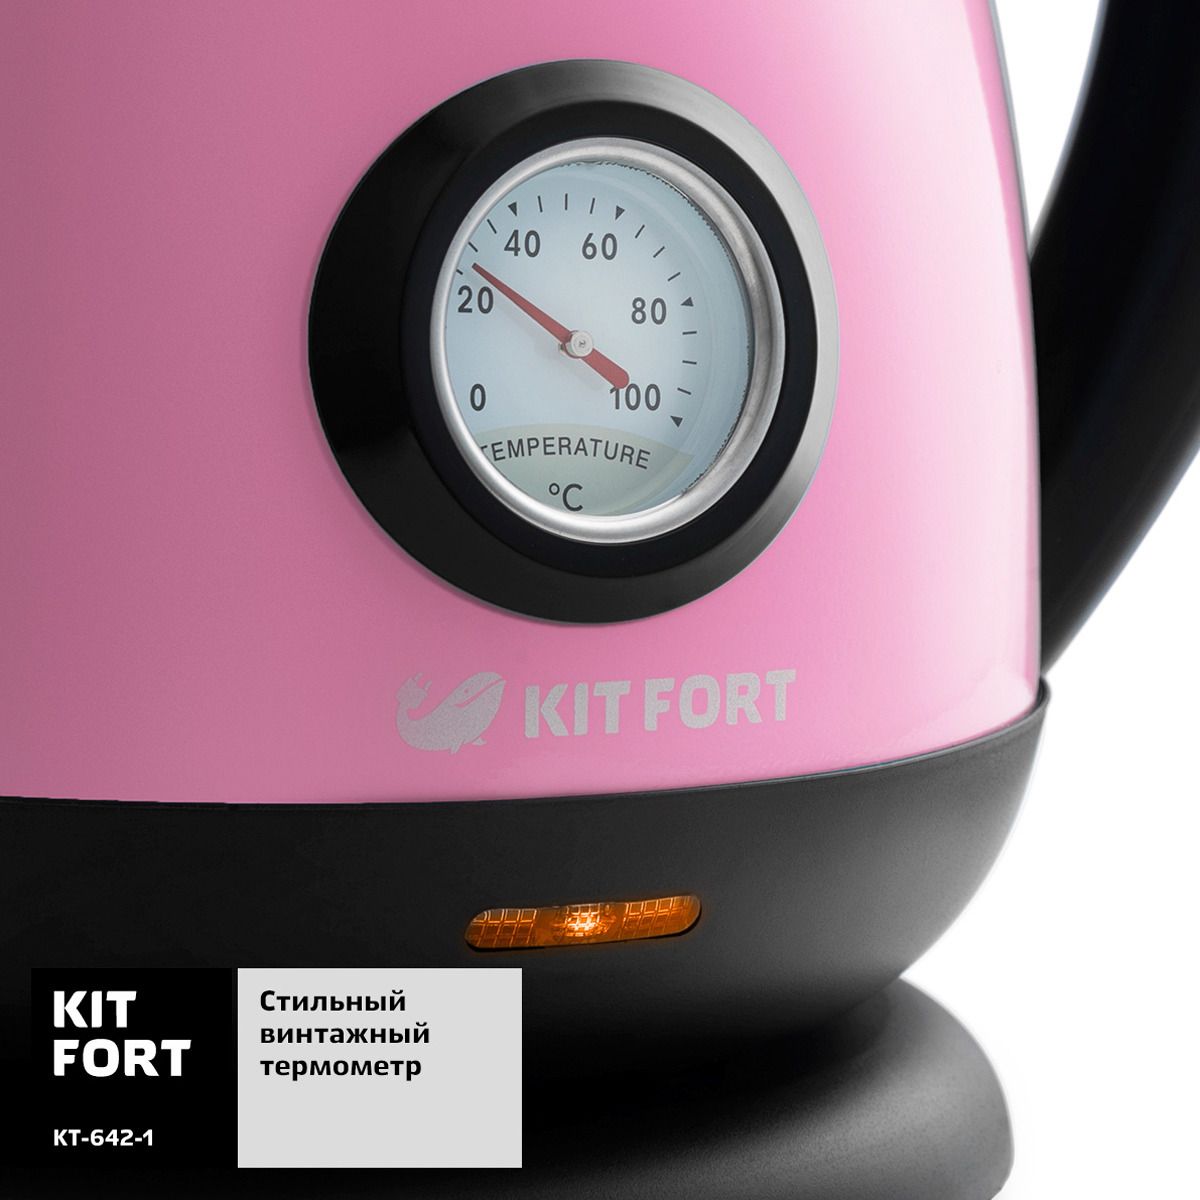   Kitfort -642-1, : , 1,7 